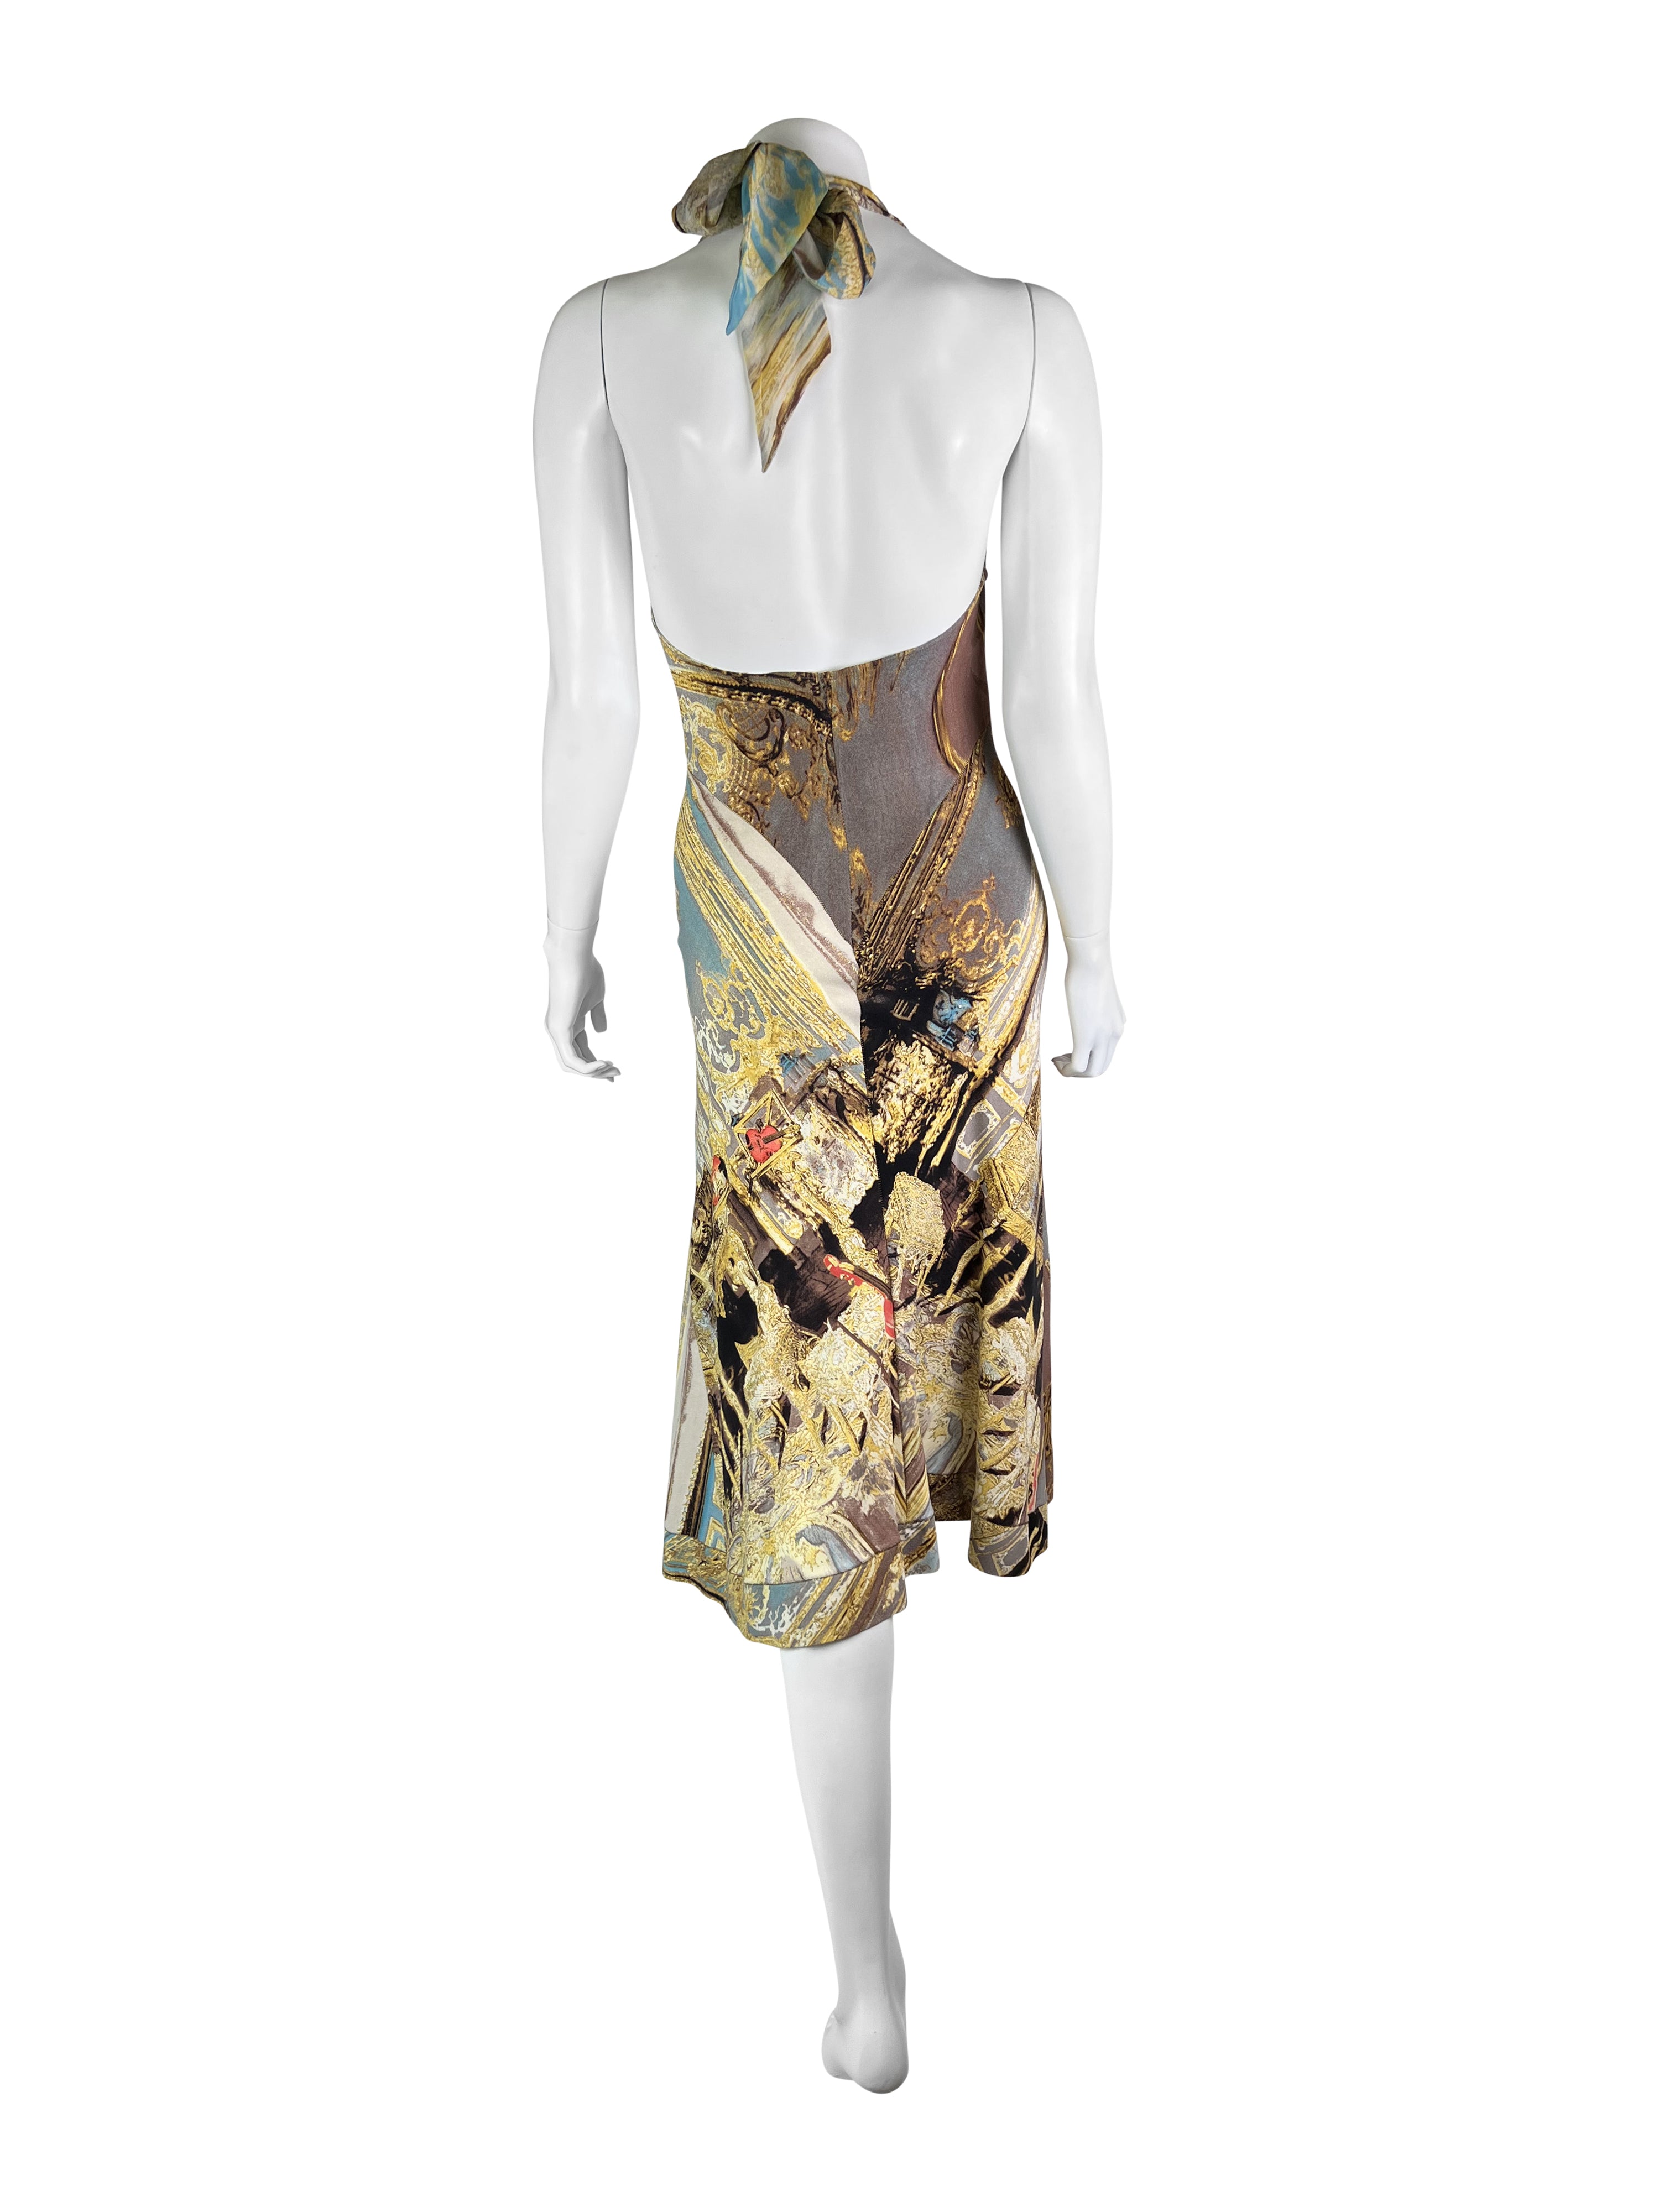 Roberto Cavalli Spring 2003 Printed Halter-neck Dress